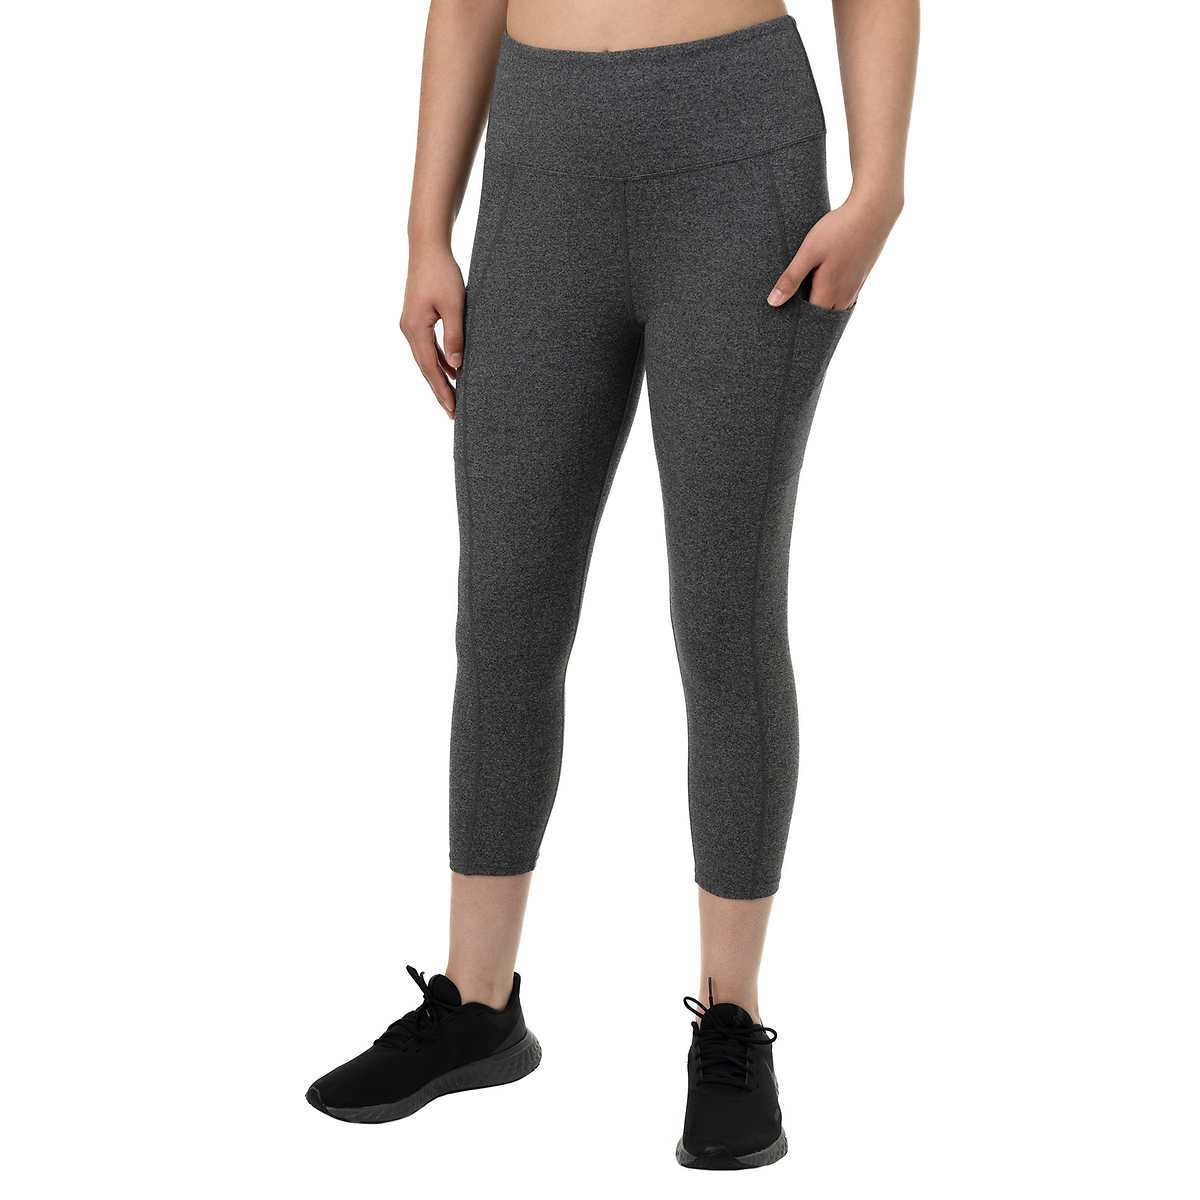 high waisted Costco Tuff Athletics MED gray/black printed leggings